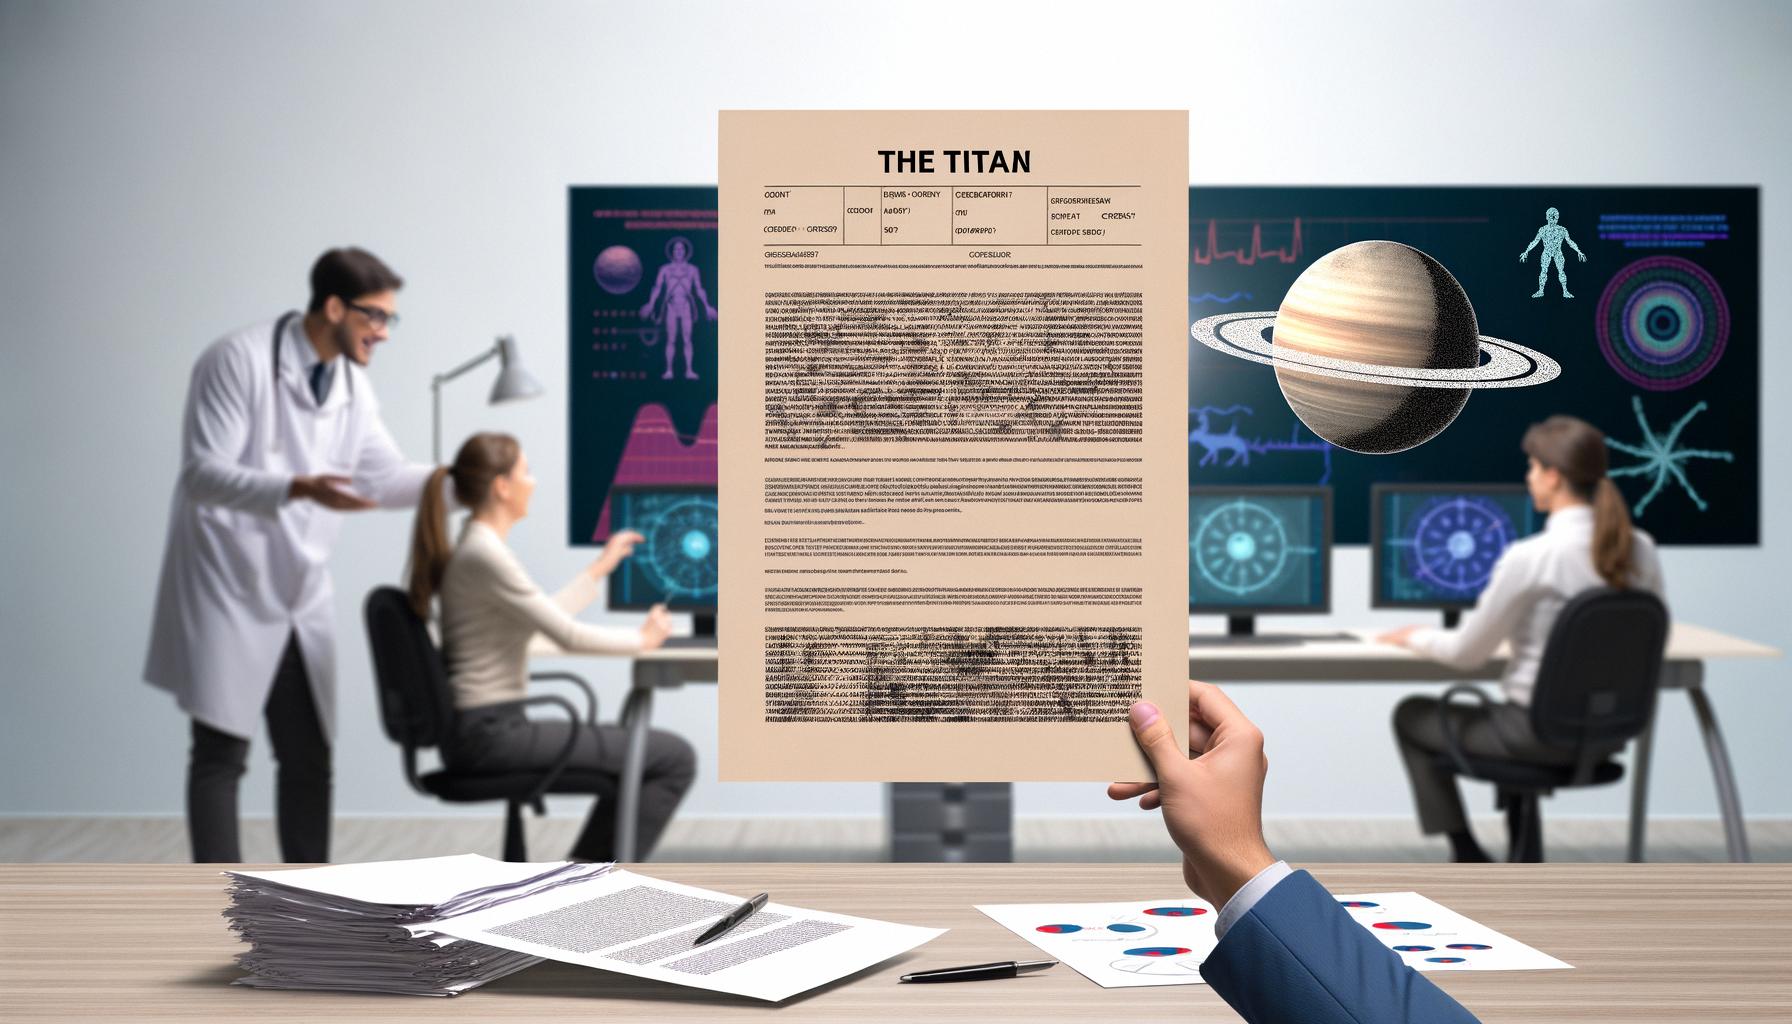 The Titan communication transcript is confirmed fake Balanced News